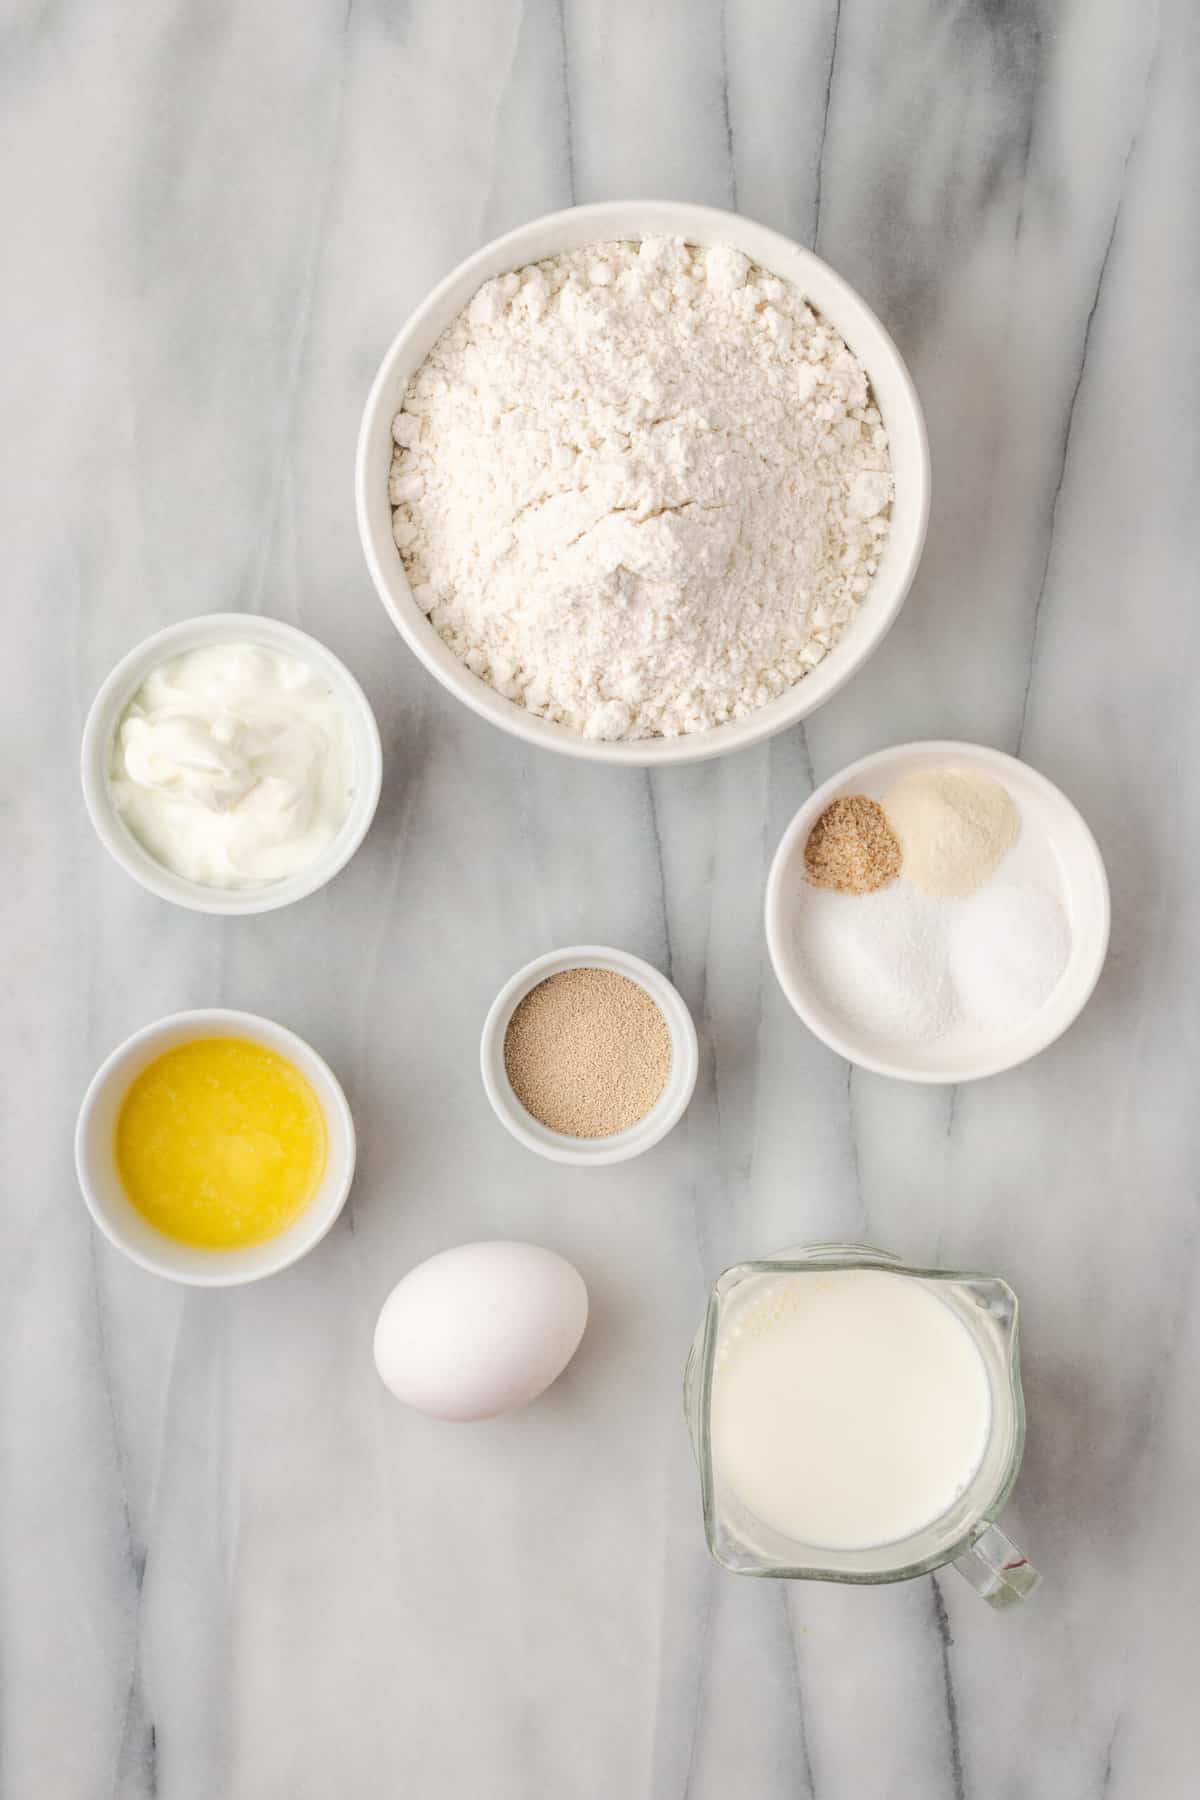 Ingredients needed to make gluten-free naan bread including gluten-free flour, an egg, butter, salt, and milk.